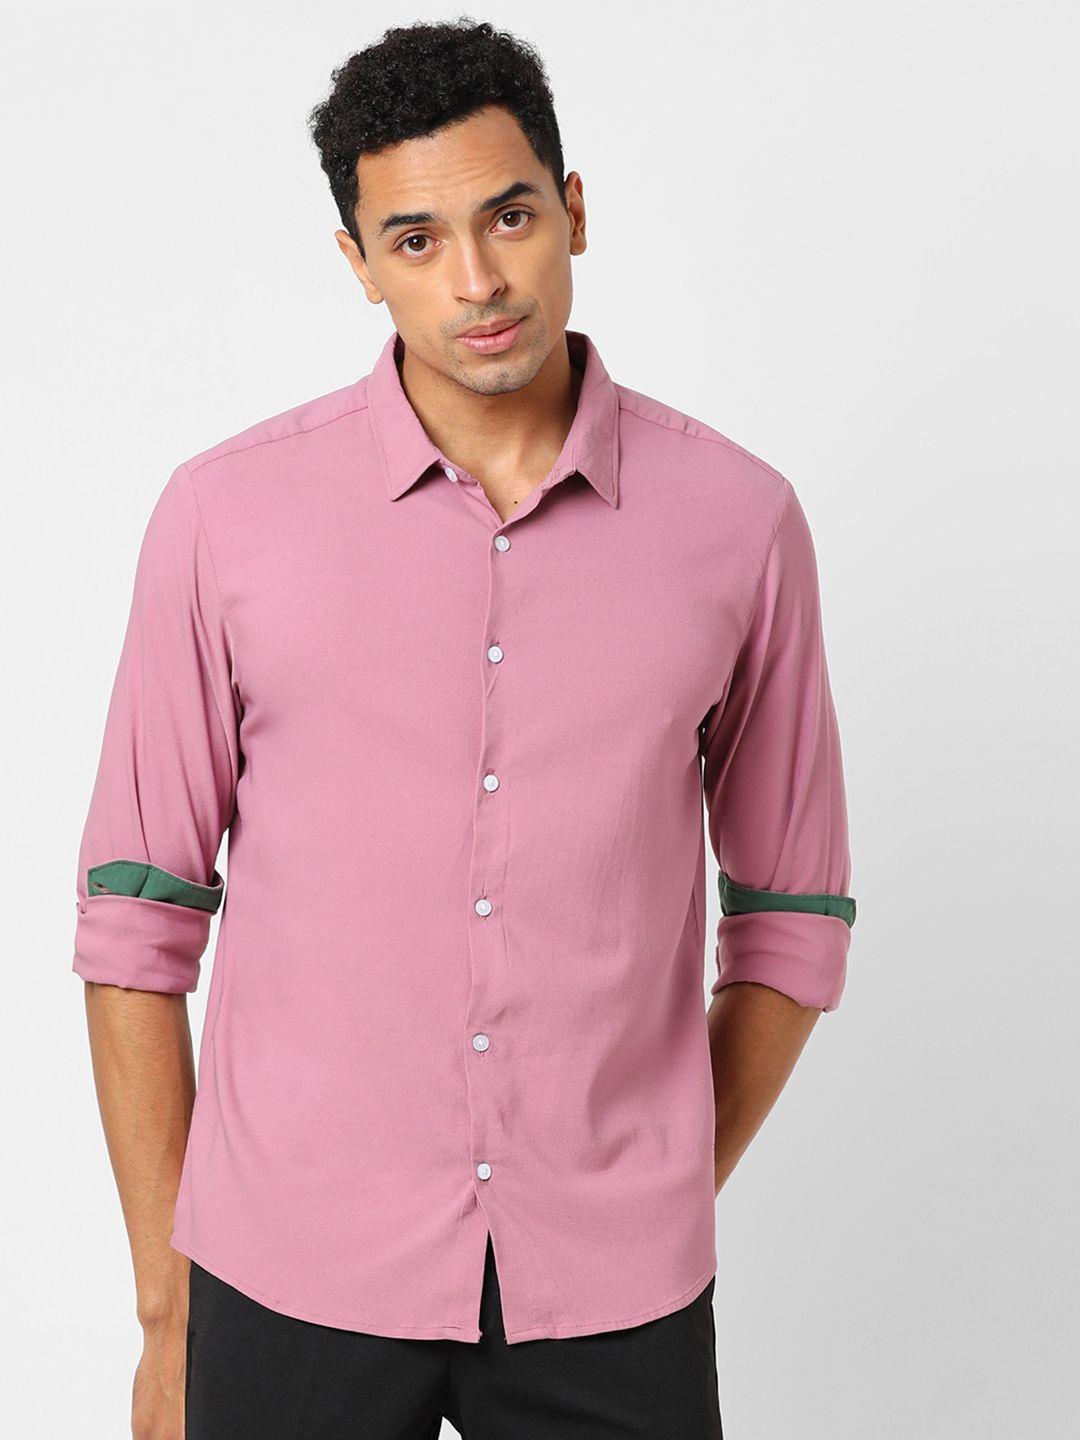 campus sutra men pink classic regular fit casual shirt